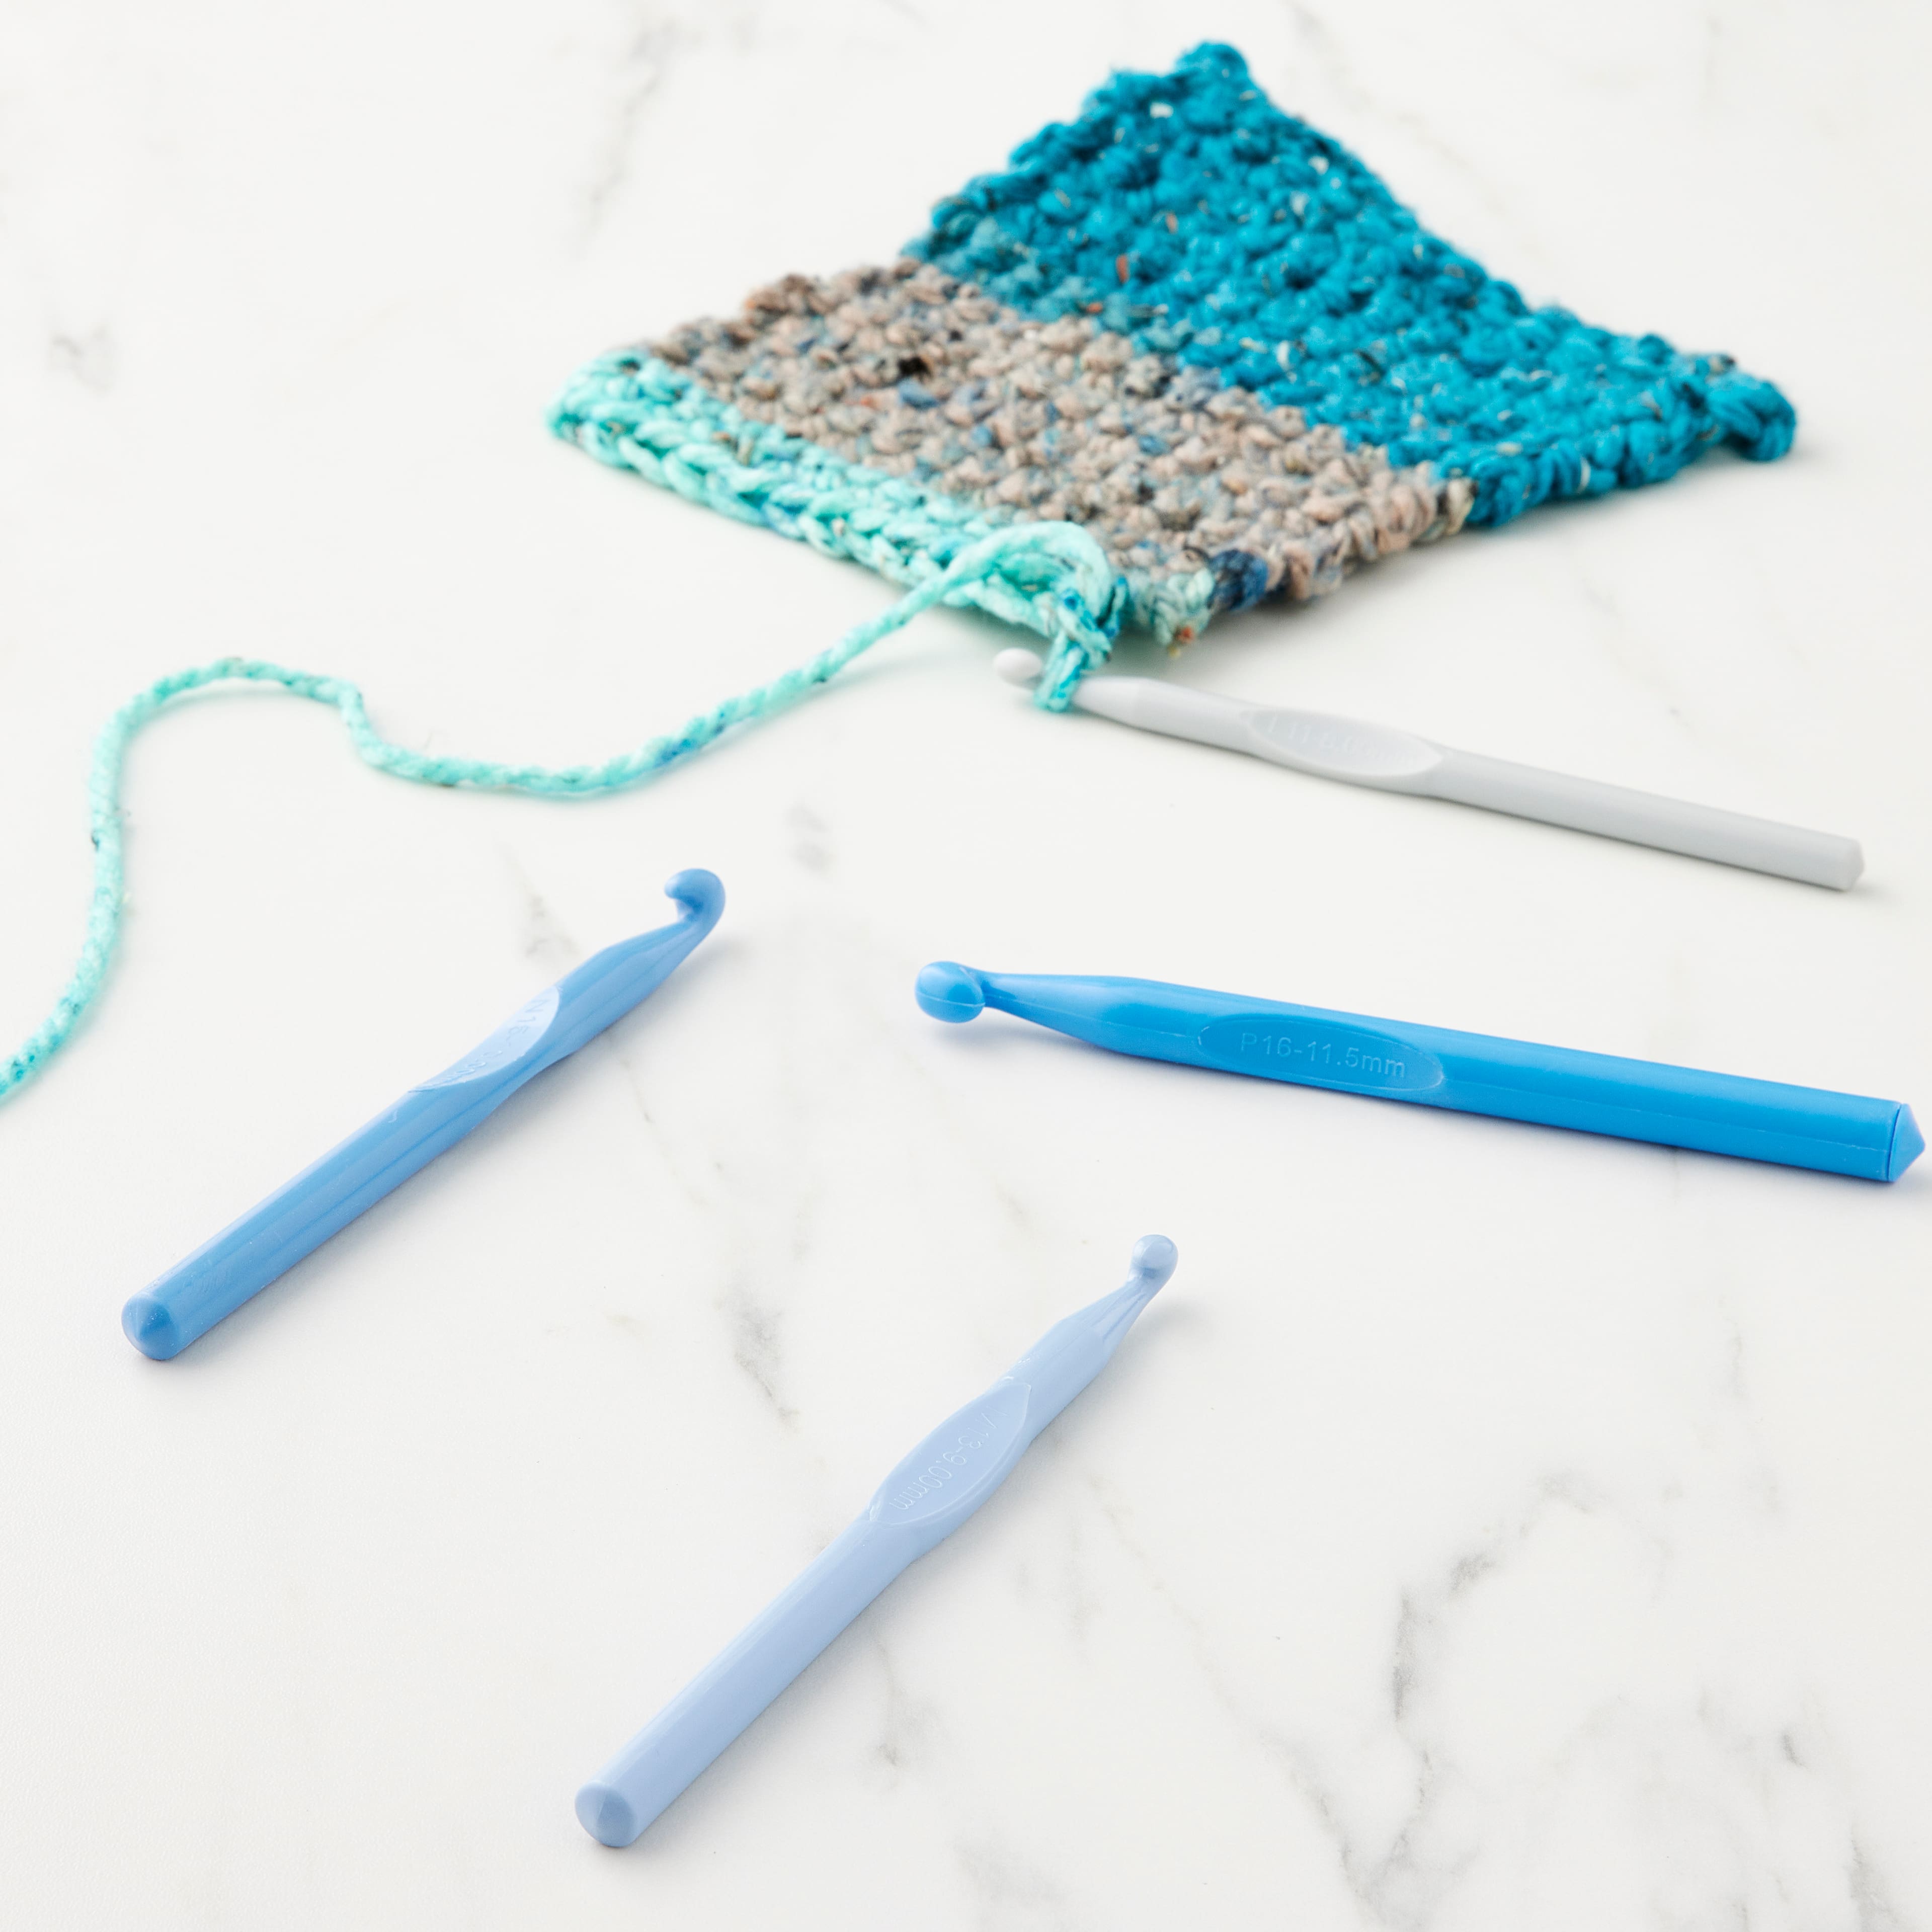 Loops & Threads 8-11.5mm Plastic Crochet Hook Set - each